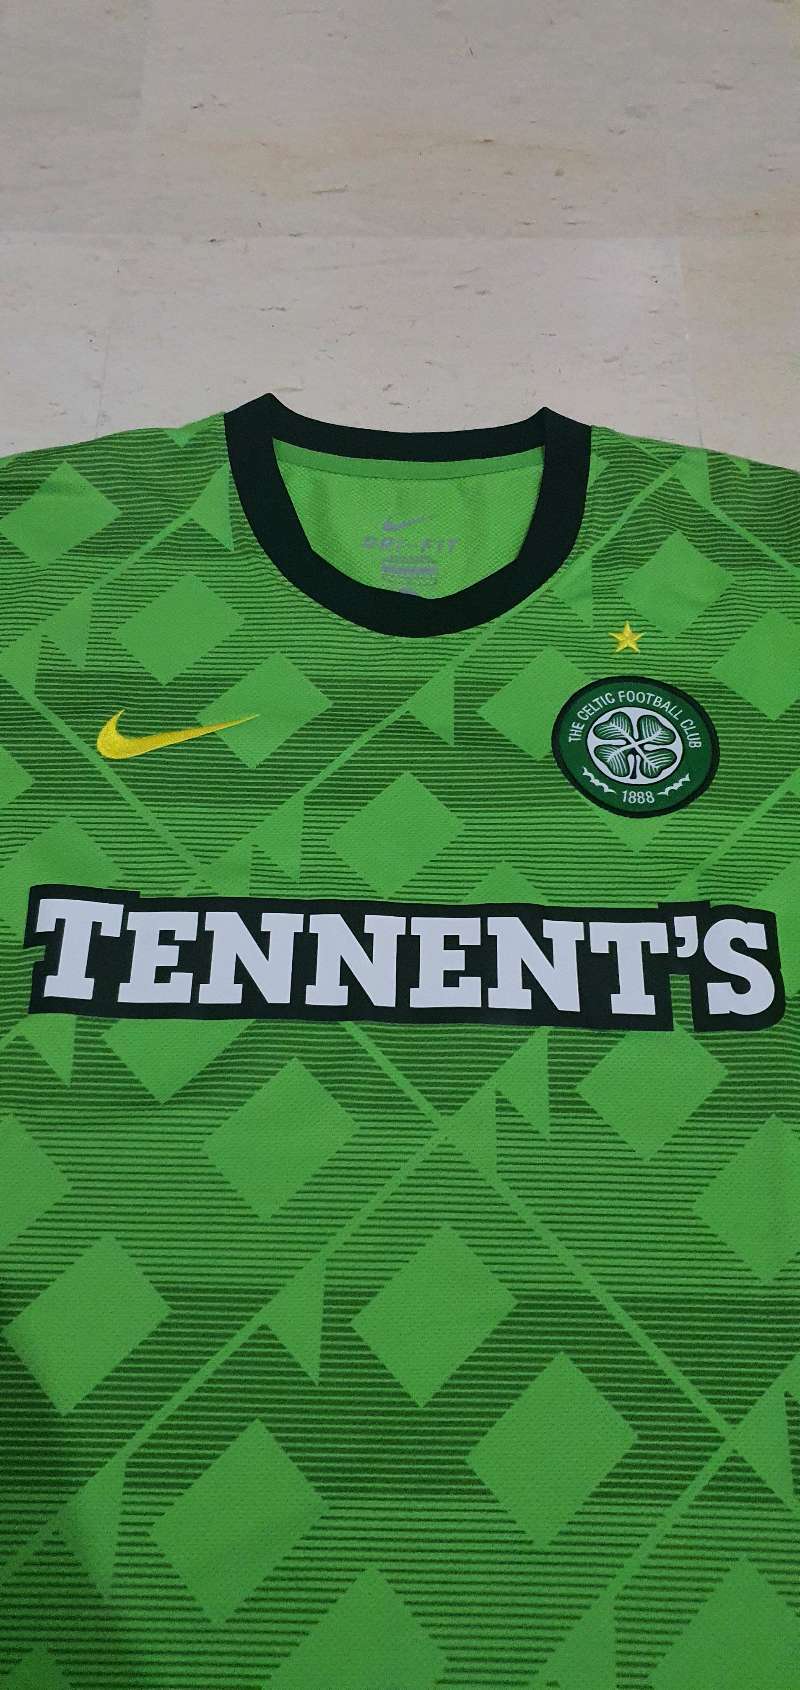 Celtic 2010/11 away shirt, in Springboig, Glasgow